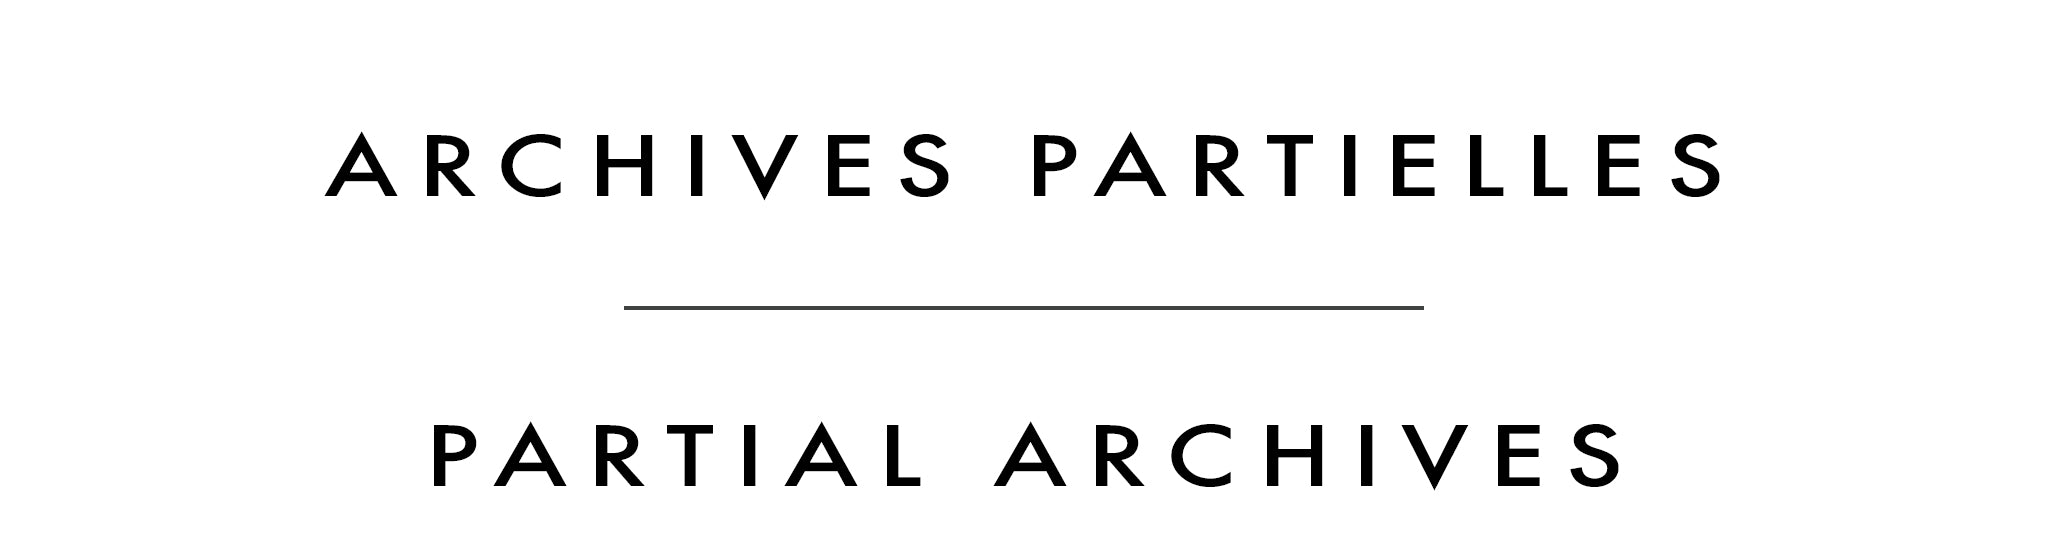 Archives partielles | Partial Archives | Shelley Mitchell